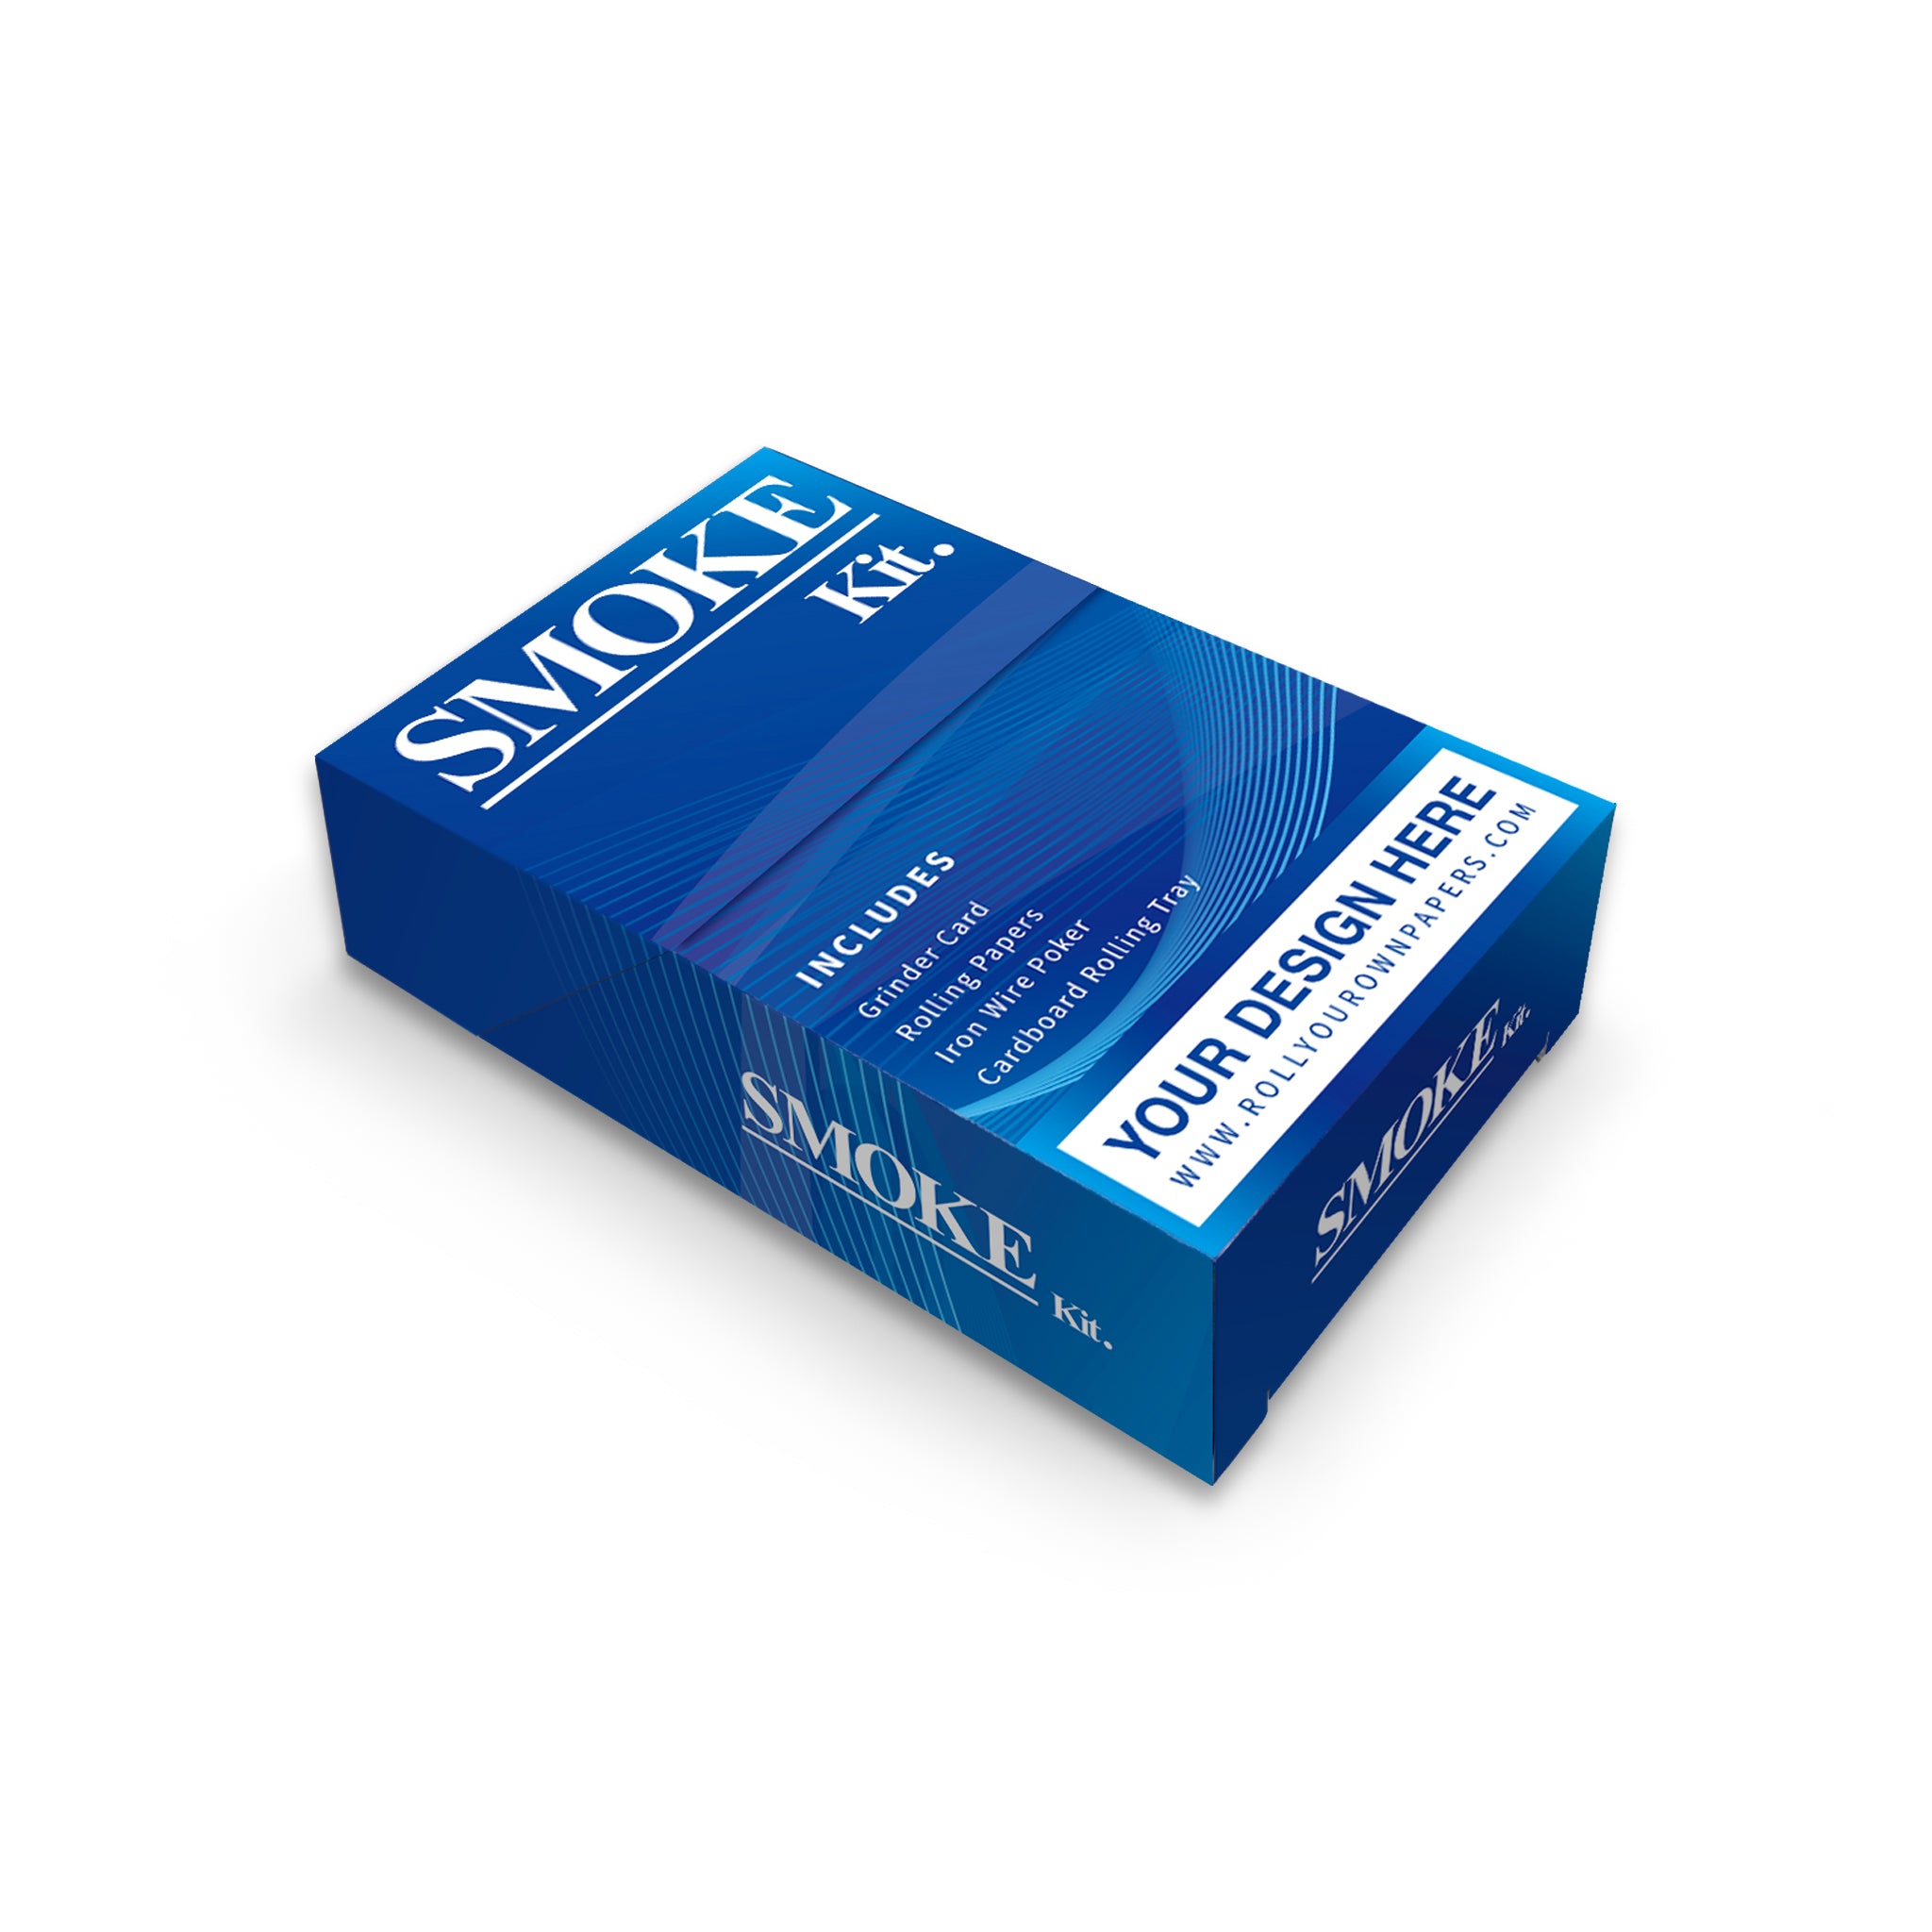 Smoke Kit with Custom Printed Packaging